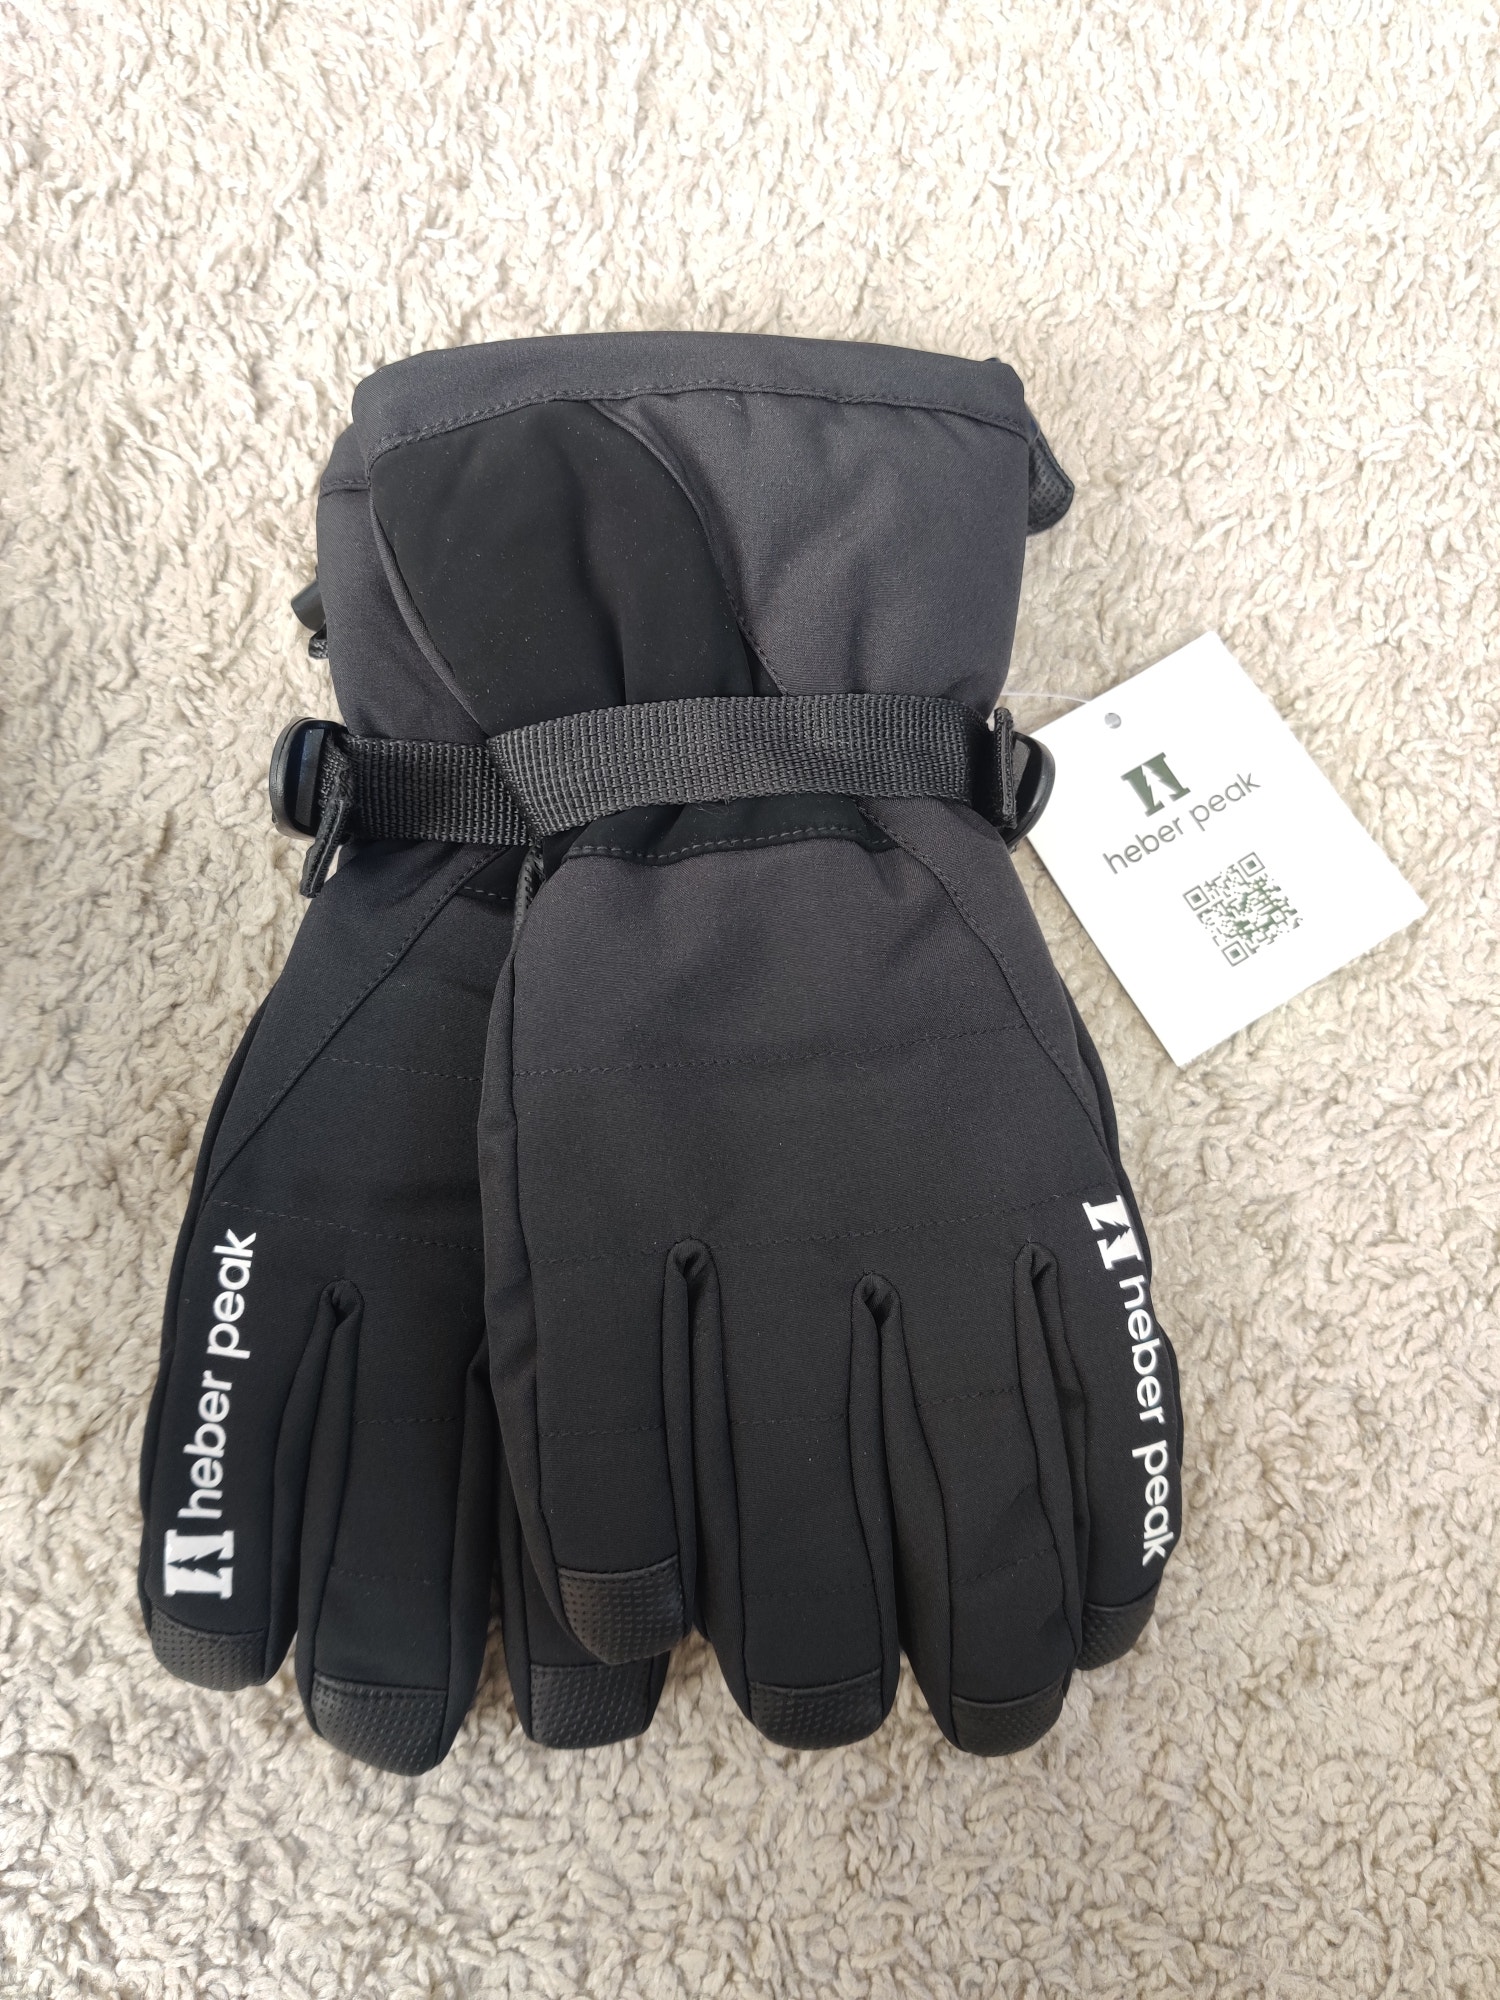 (V) Heber Peak Viggest 5 Finger Glove MEN'S SKI AND SNOW WATERPROOF MITTENS SZ 9 - Picture 1 of 10